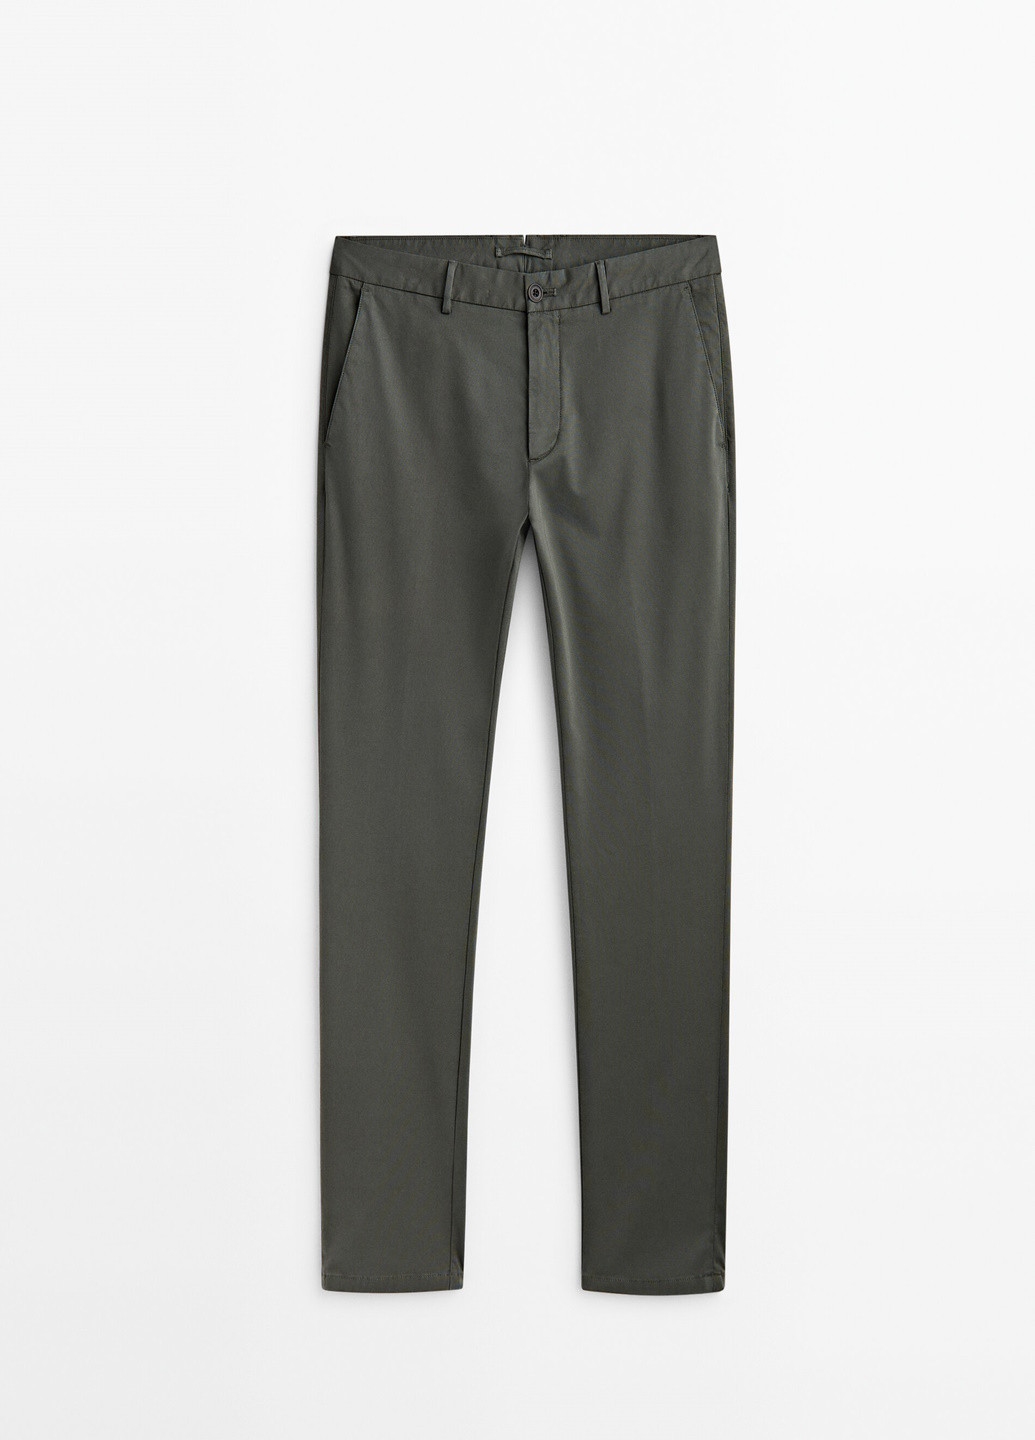 Хаки классические демисезонные брюки Massimo Dutti